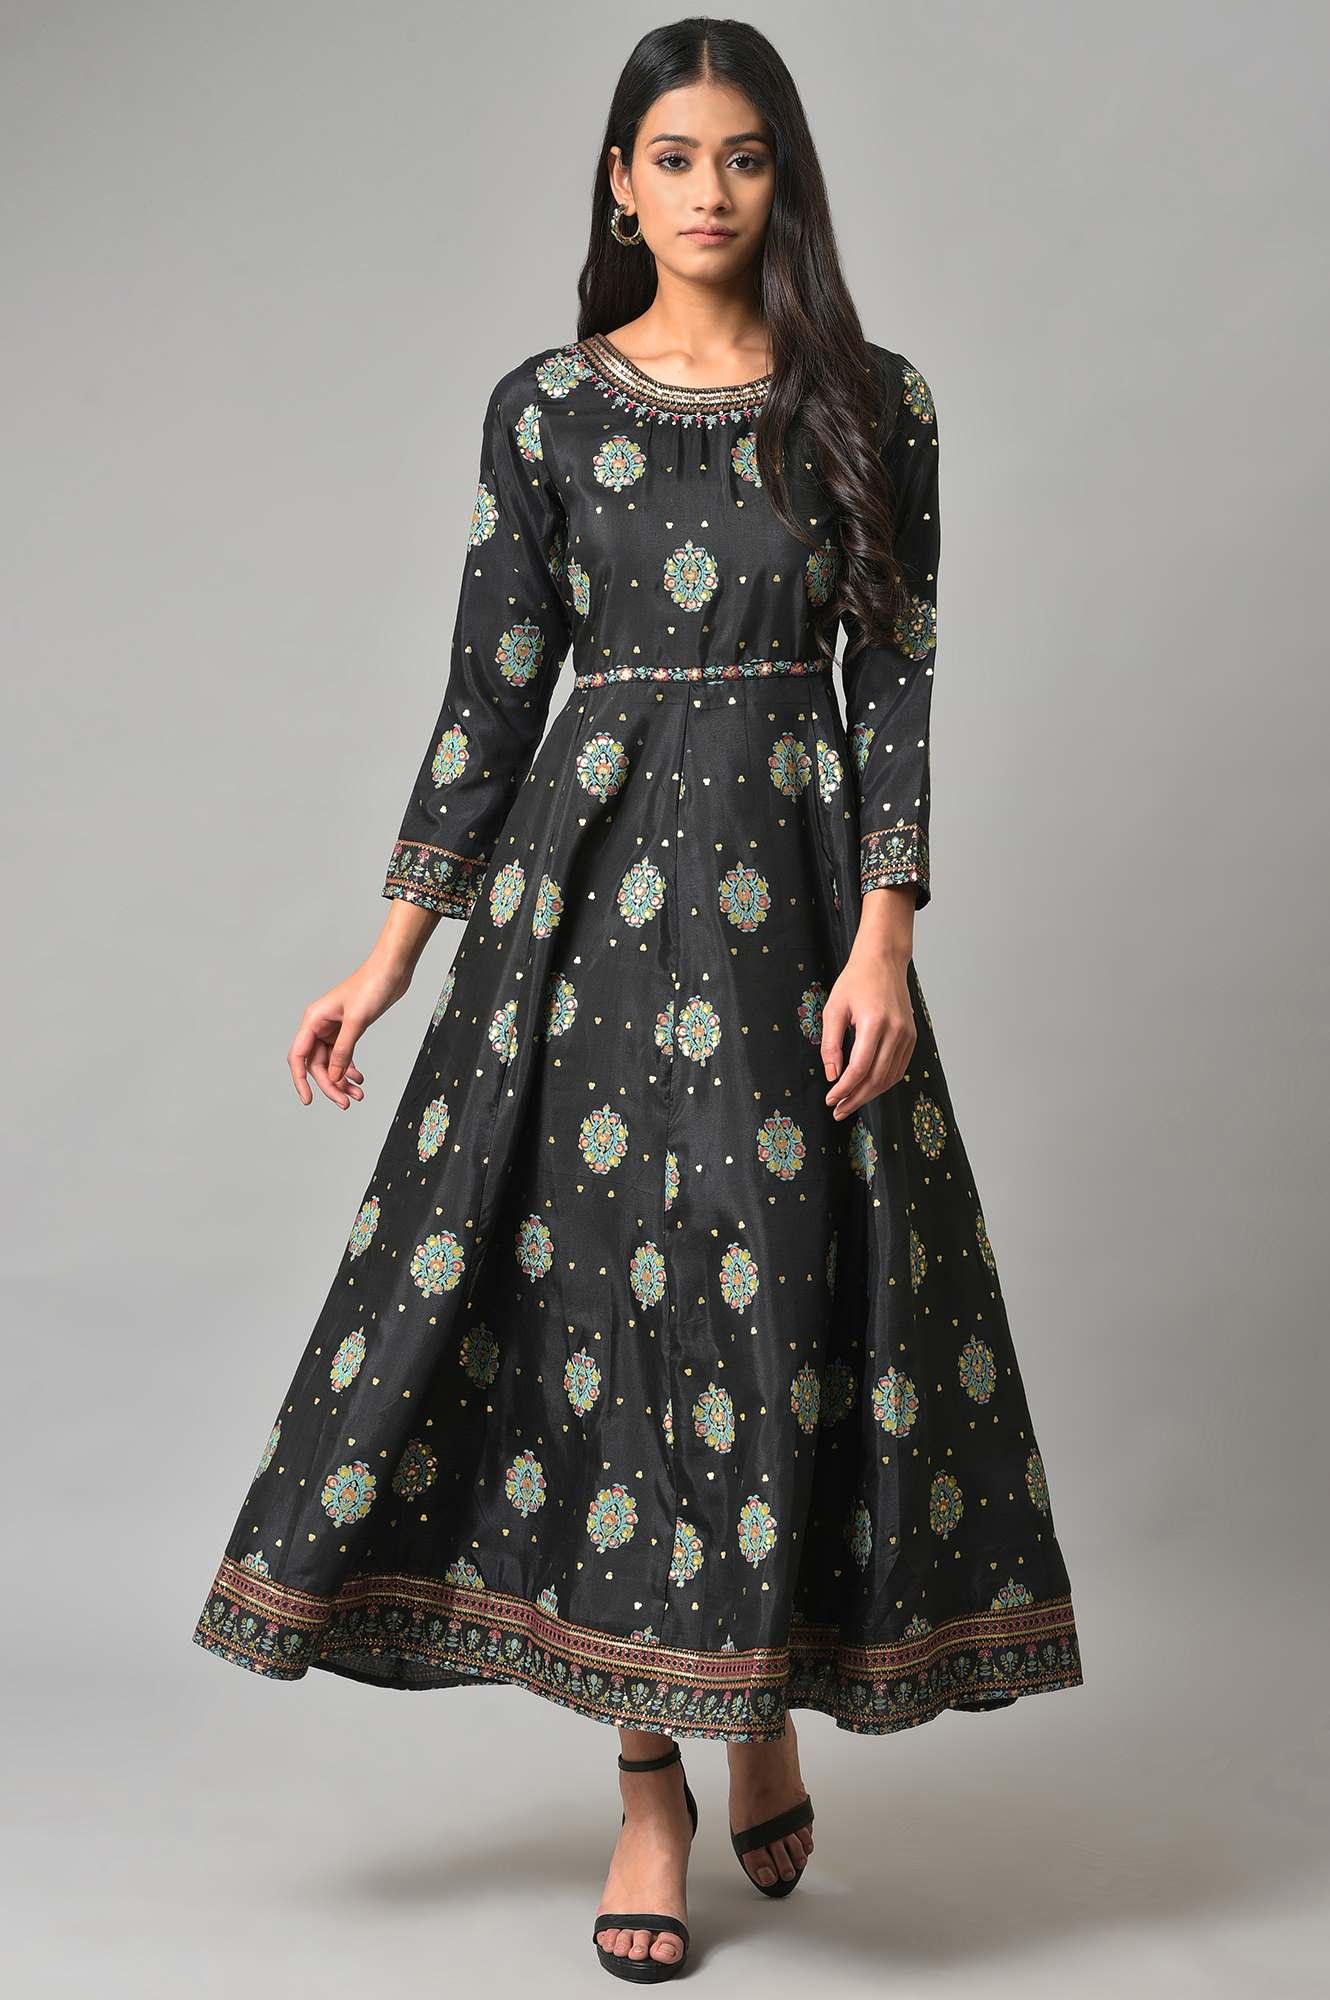 Jet Black Printed Kalidar Embroidered Dress - wforwoman